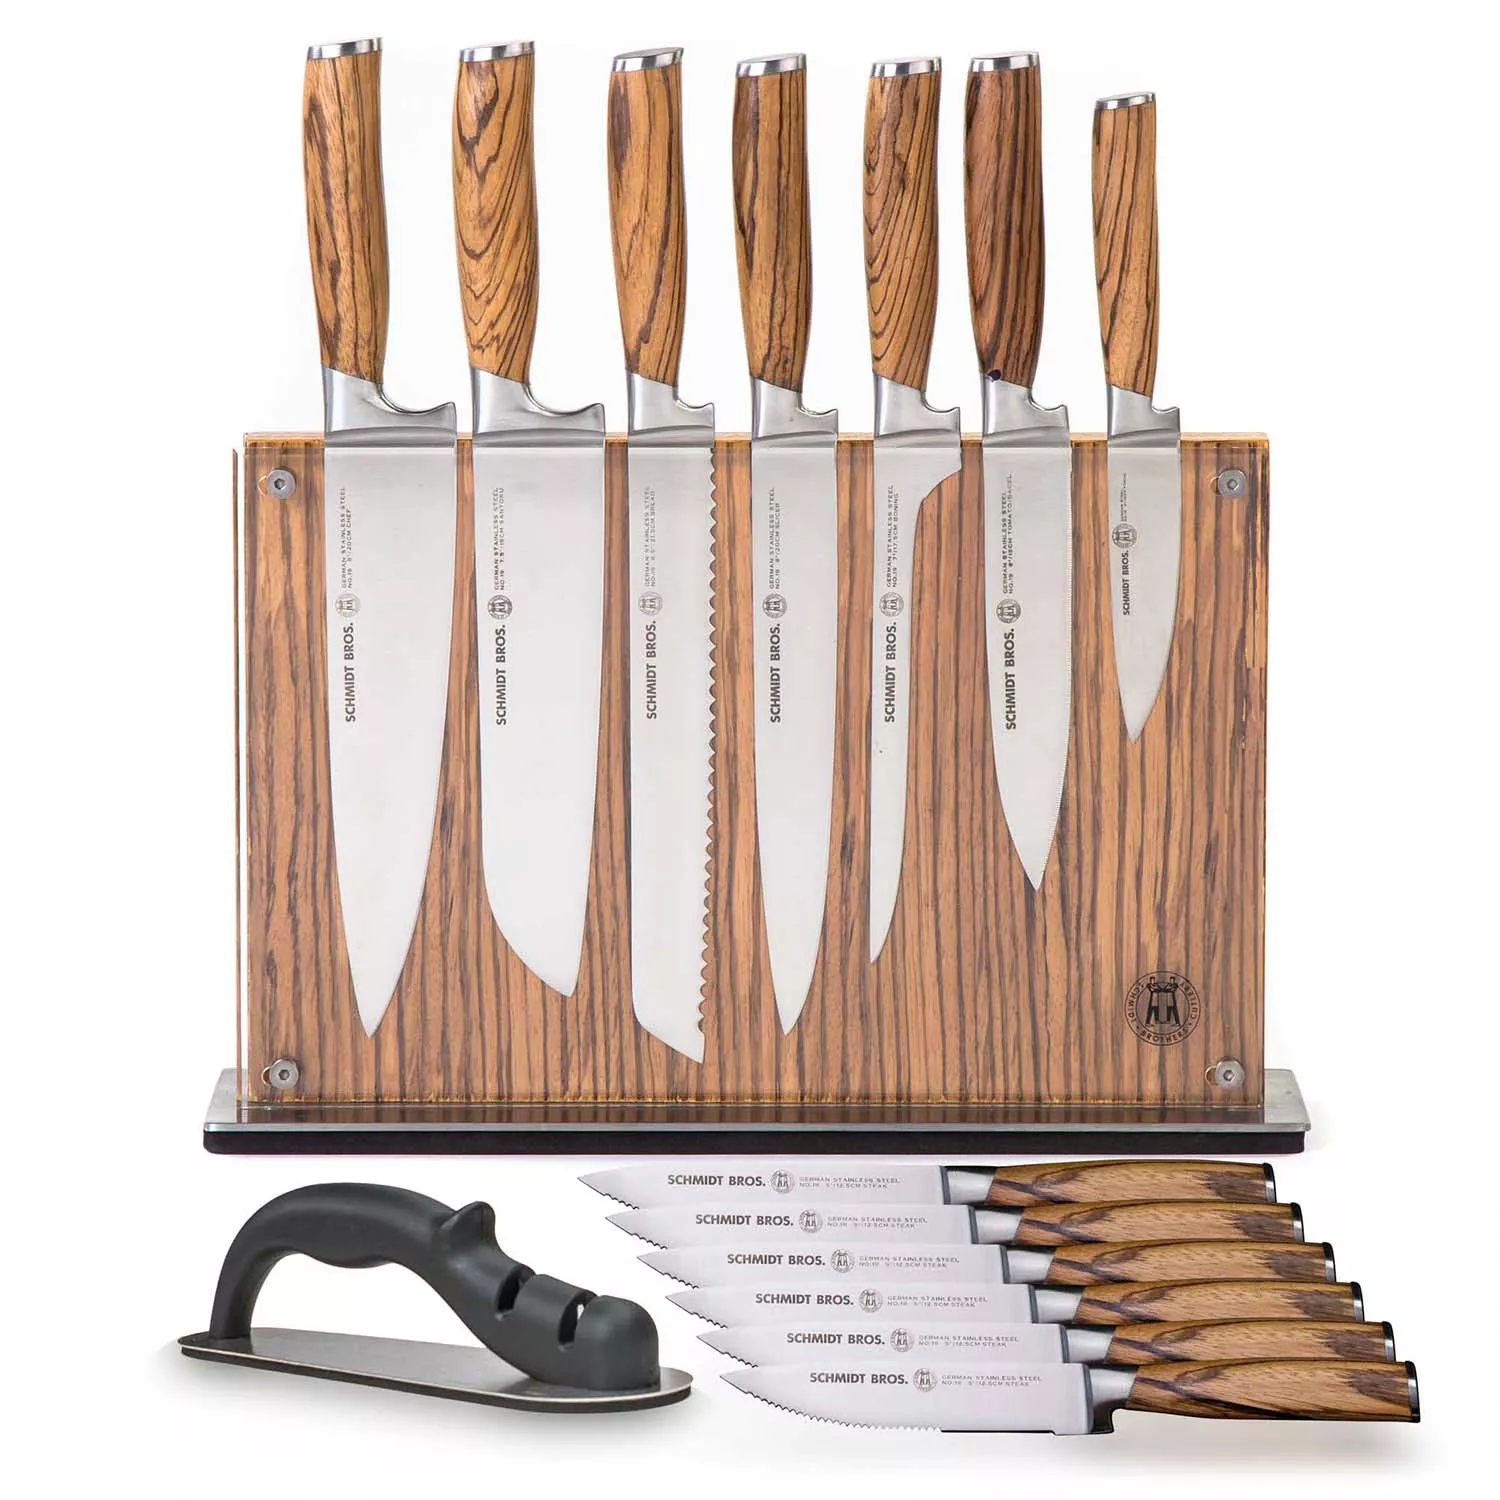 Viking 15-Piece German Steel Knife Block Set with Acacia Wood